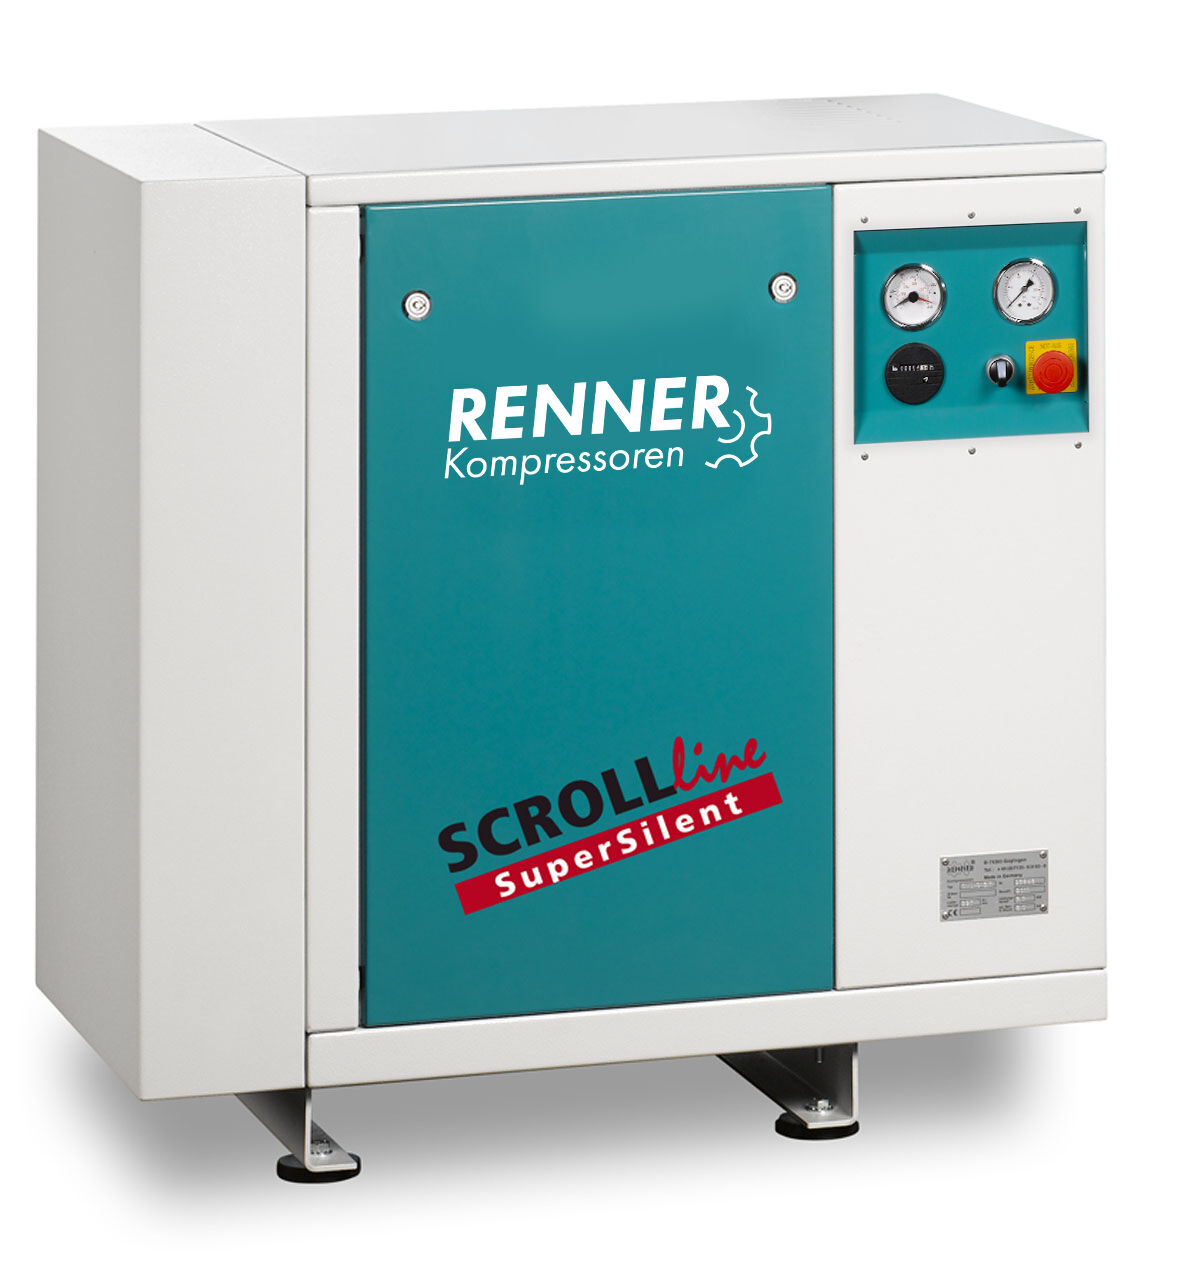 RENNER-Kompressor SL-S 3,7 - SuperSilent ölfreier Scrollkompressor